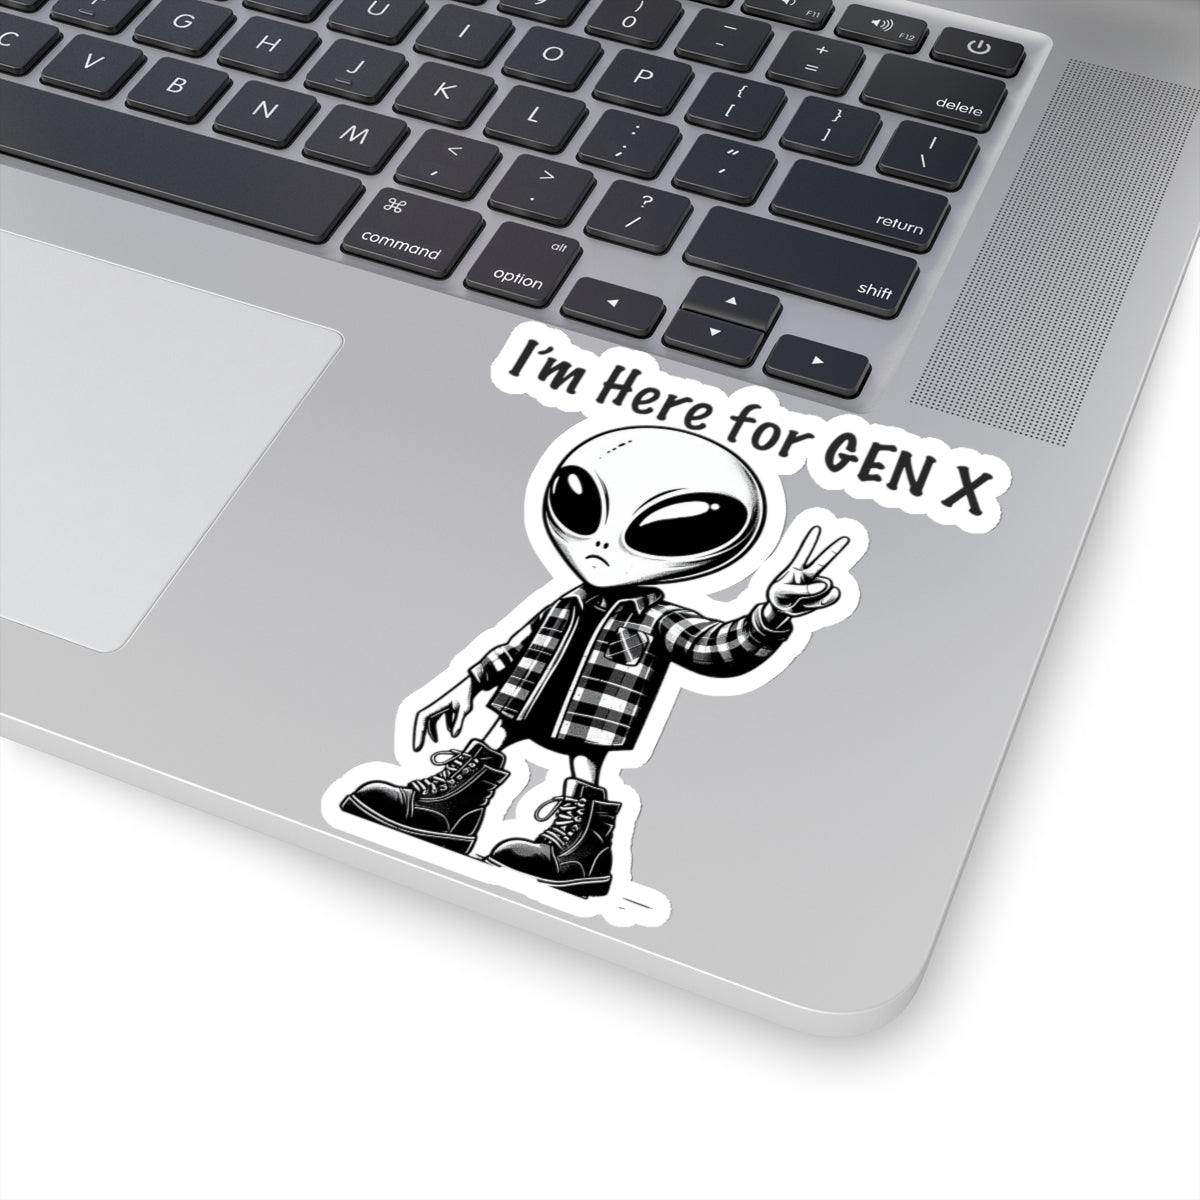 Gen X Alien ~ I'm here for Gen X very large white sticker